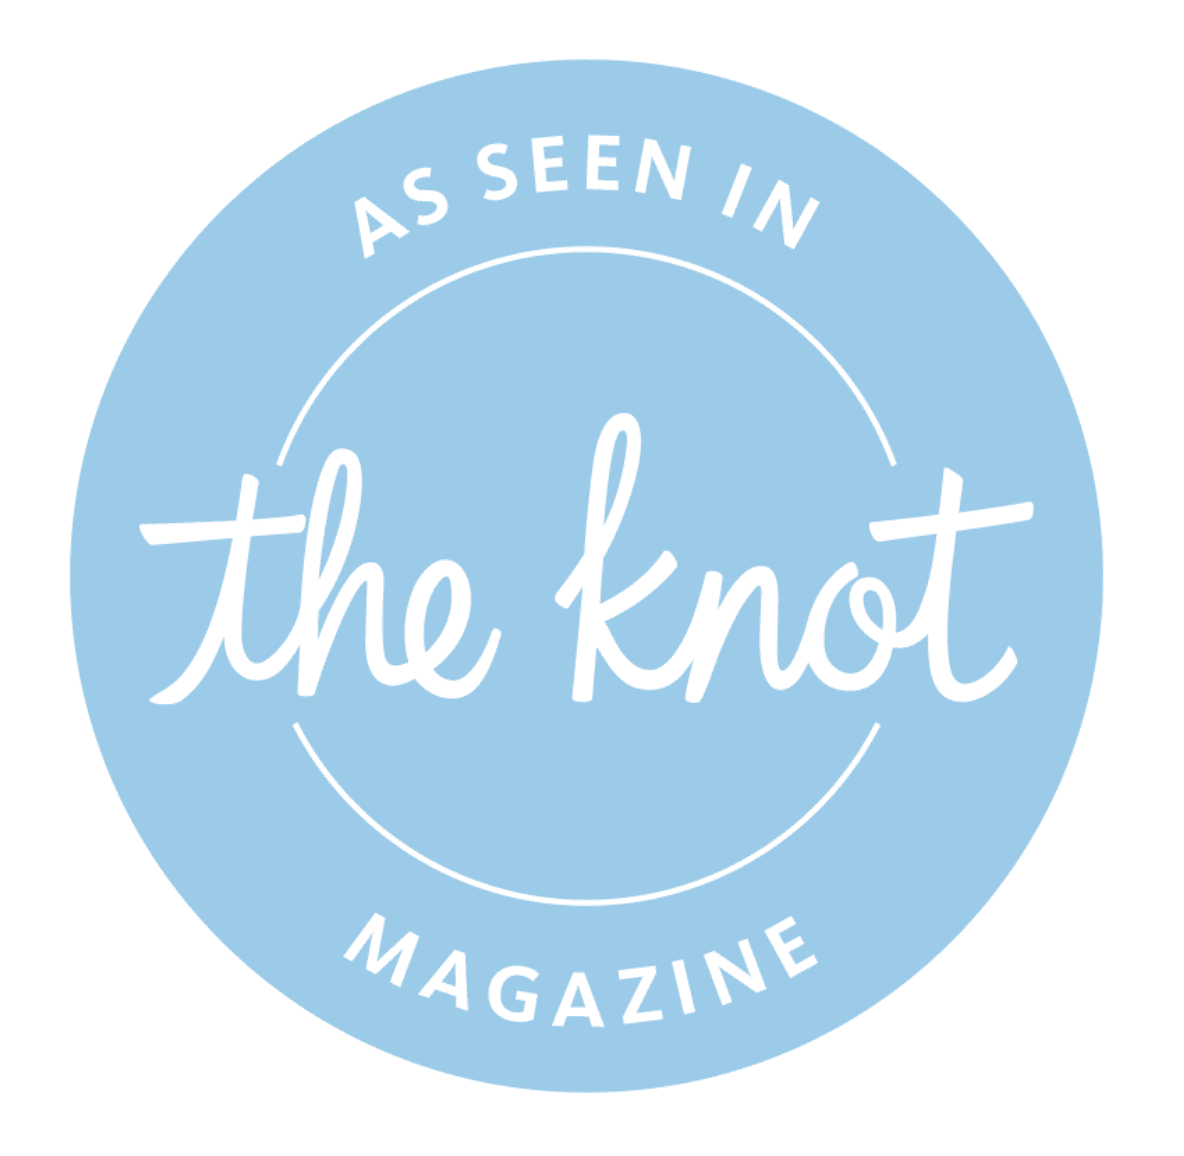 theknot-magazine-badge.png